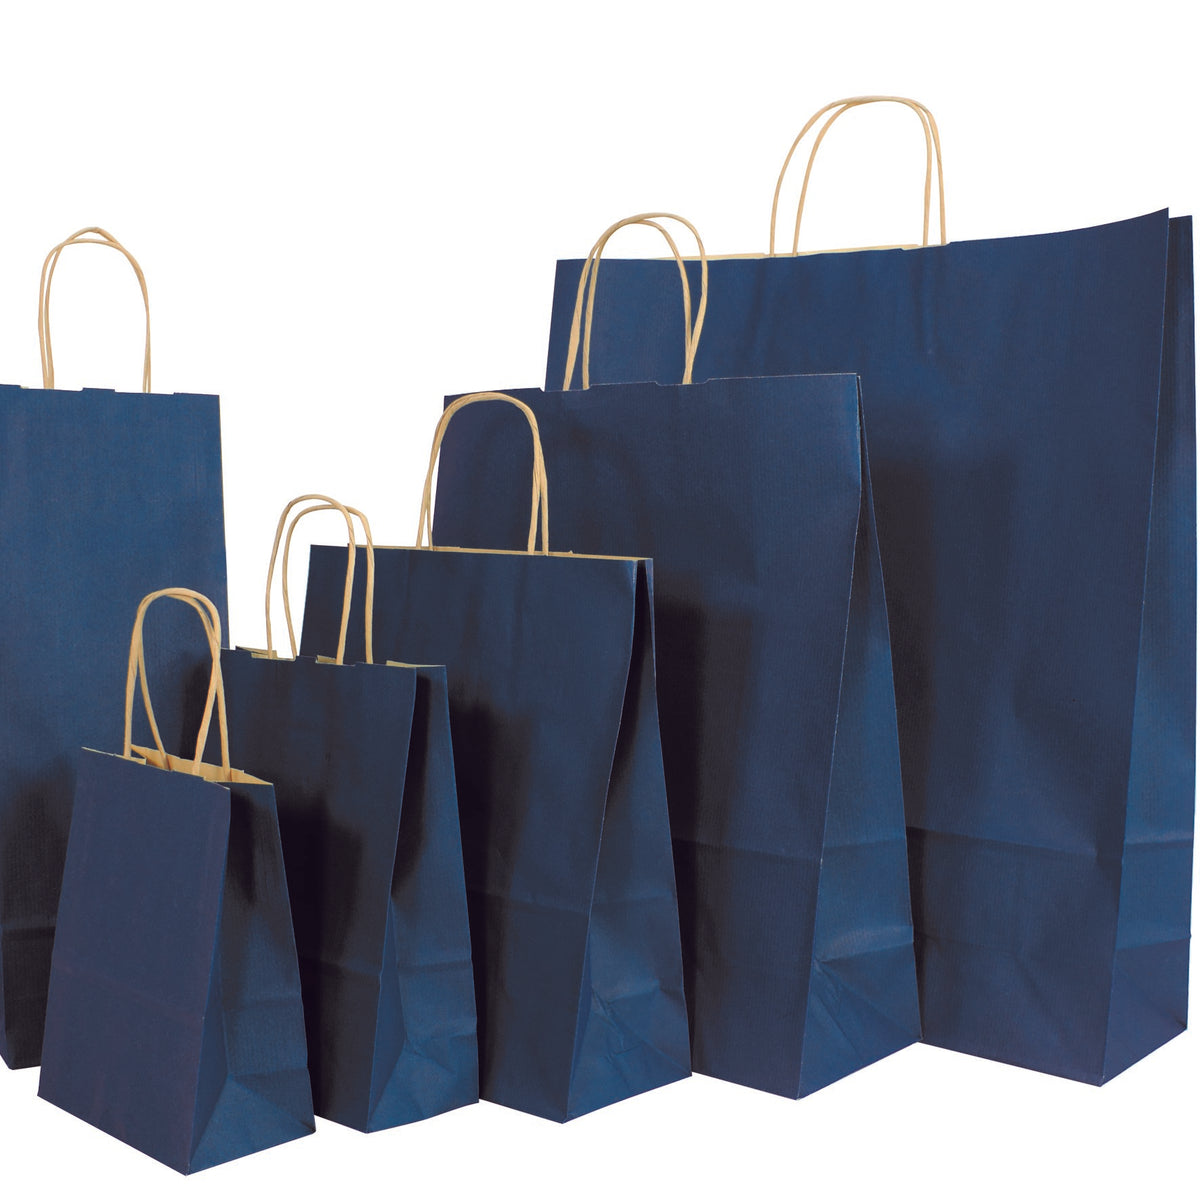 Kraft Bags from Kraft Colours range - Rayleigh Blue